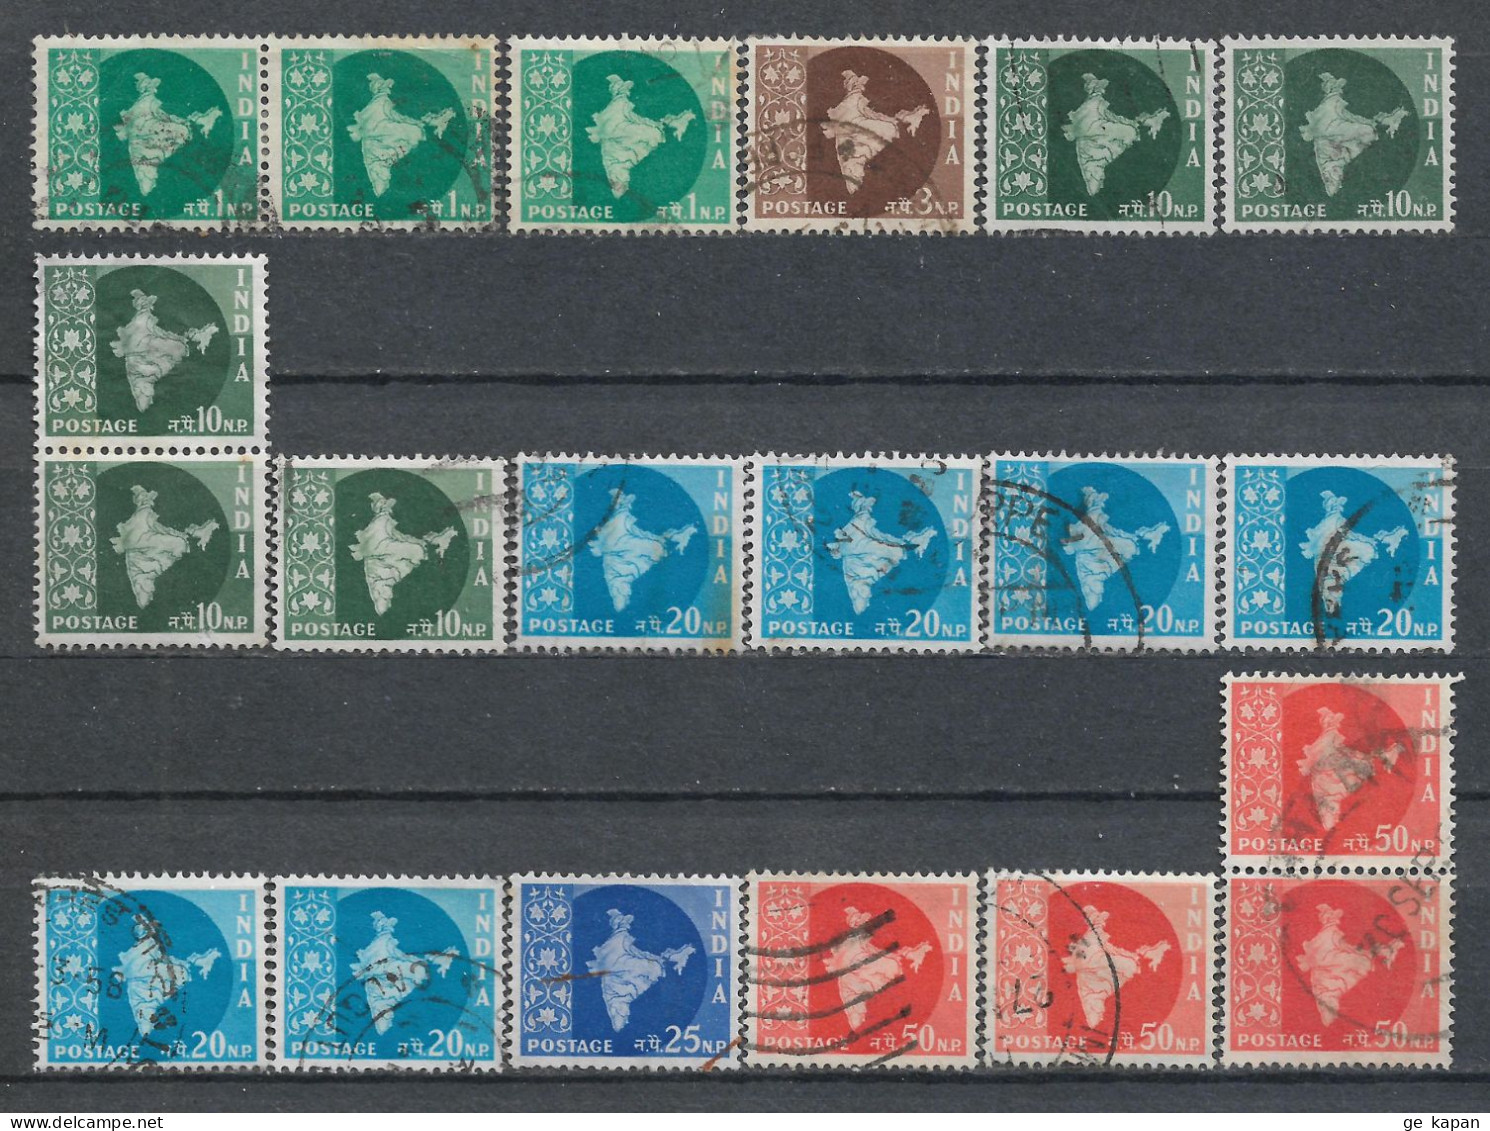 1957 INDIA SET OF 20 USED STAMPS (Michel # 259,261,265,268-270) CV €4.00 - Oblitérés